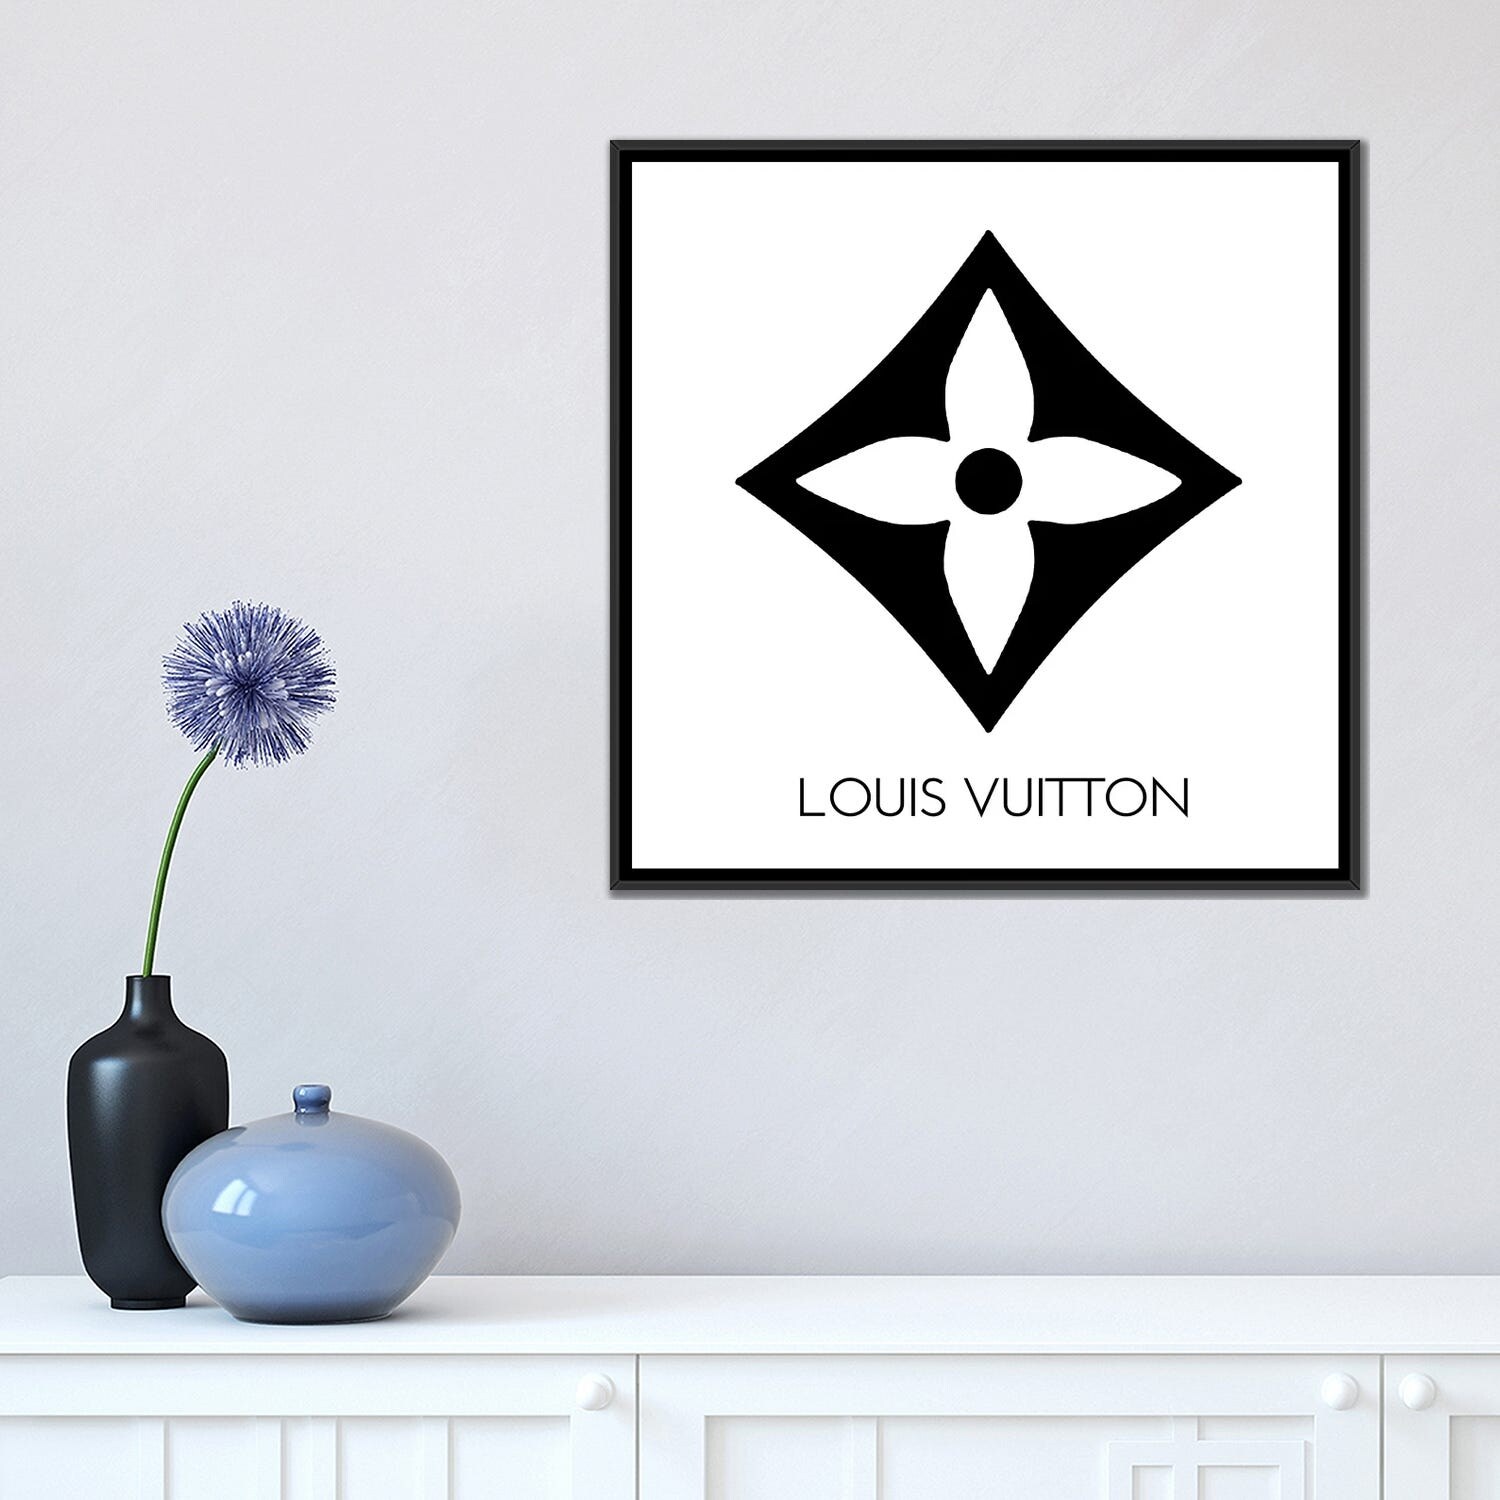 Art Mirano Paintings Canvas Art Prints - Louis Vuitton Symbol Light White ( Fashion > Fashion Brands > Louis Vuitton art) - 18x18 in